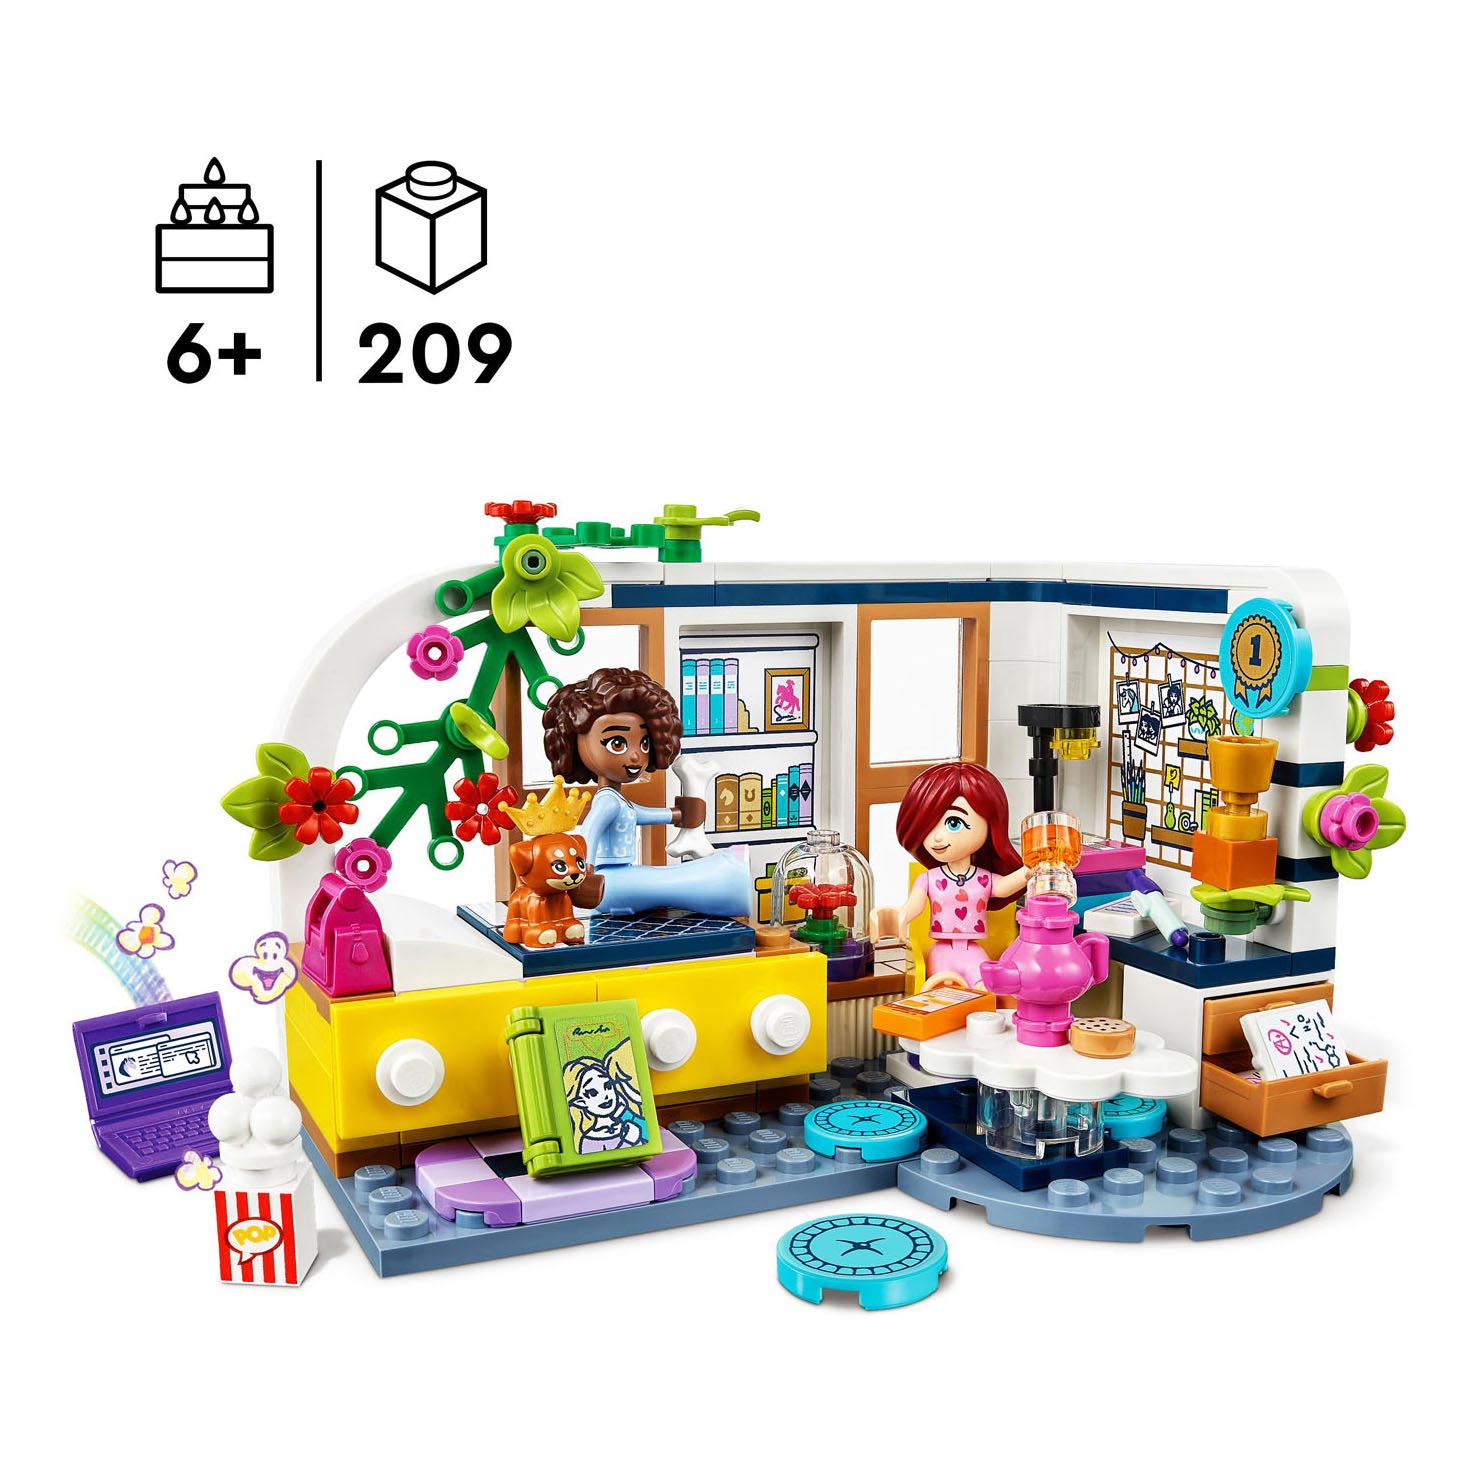 LEGO Friends 41740 Aliya's Kamer